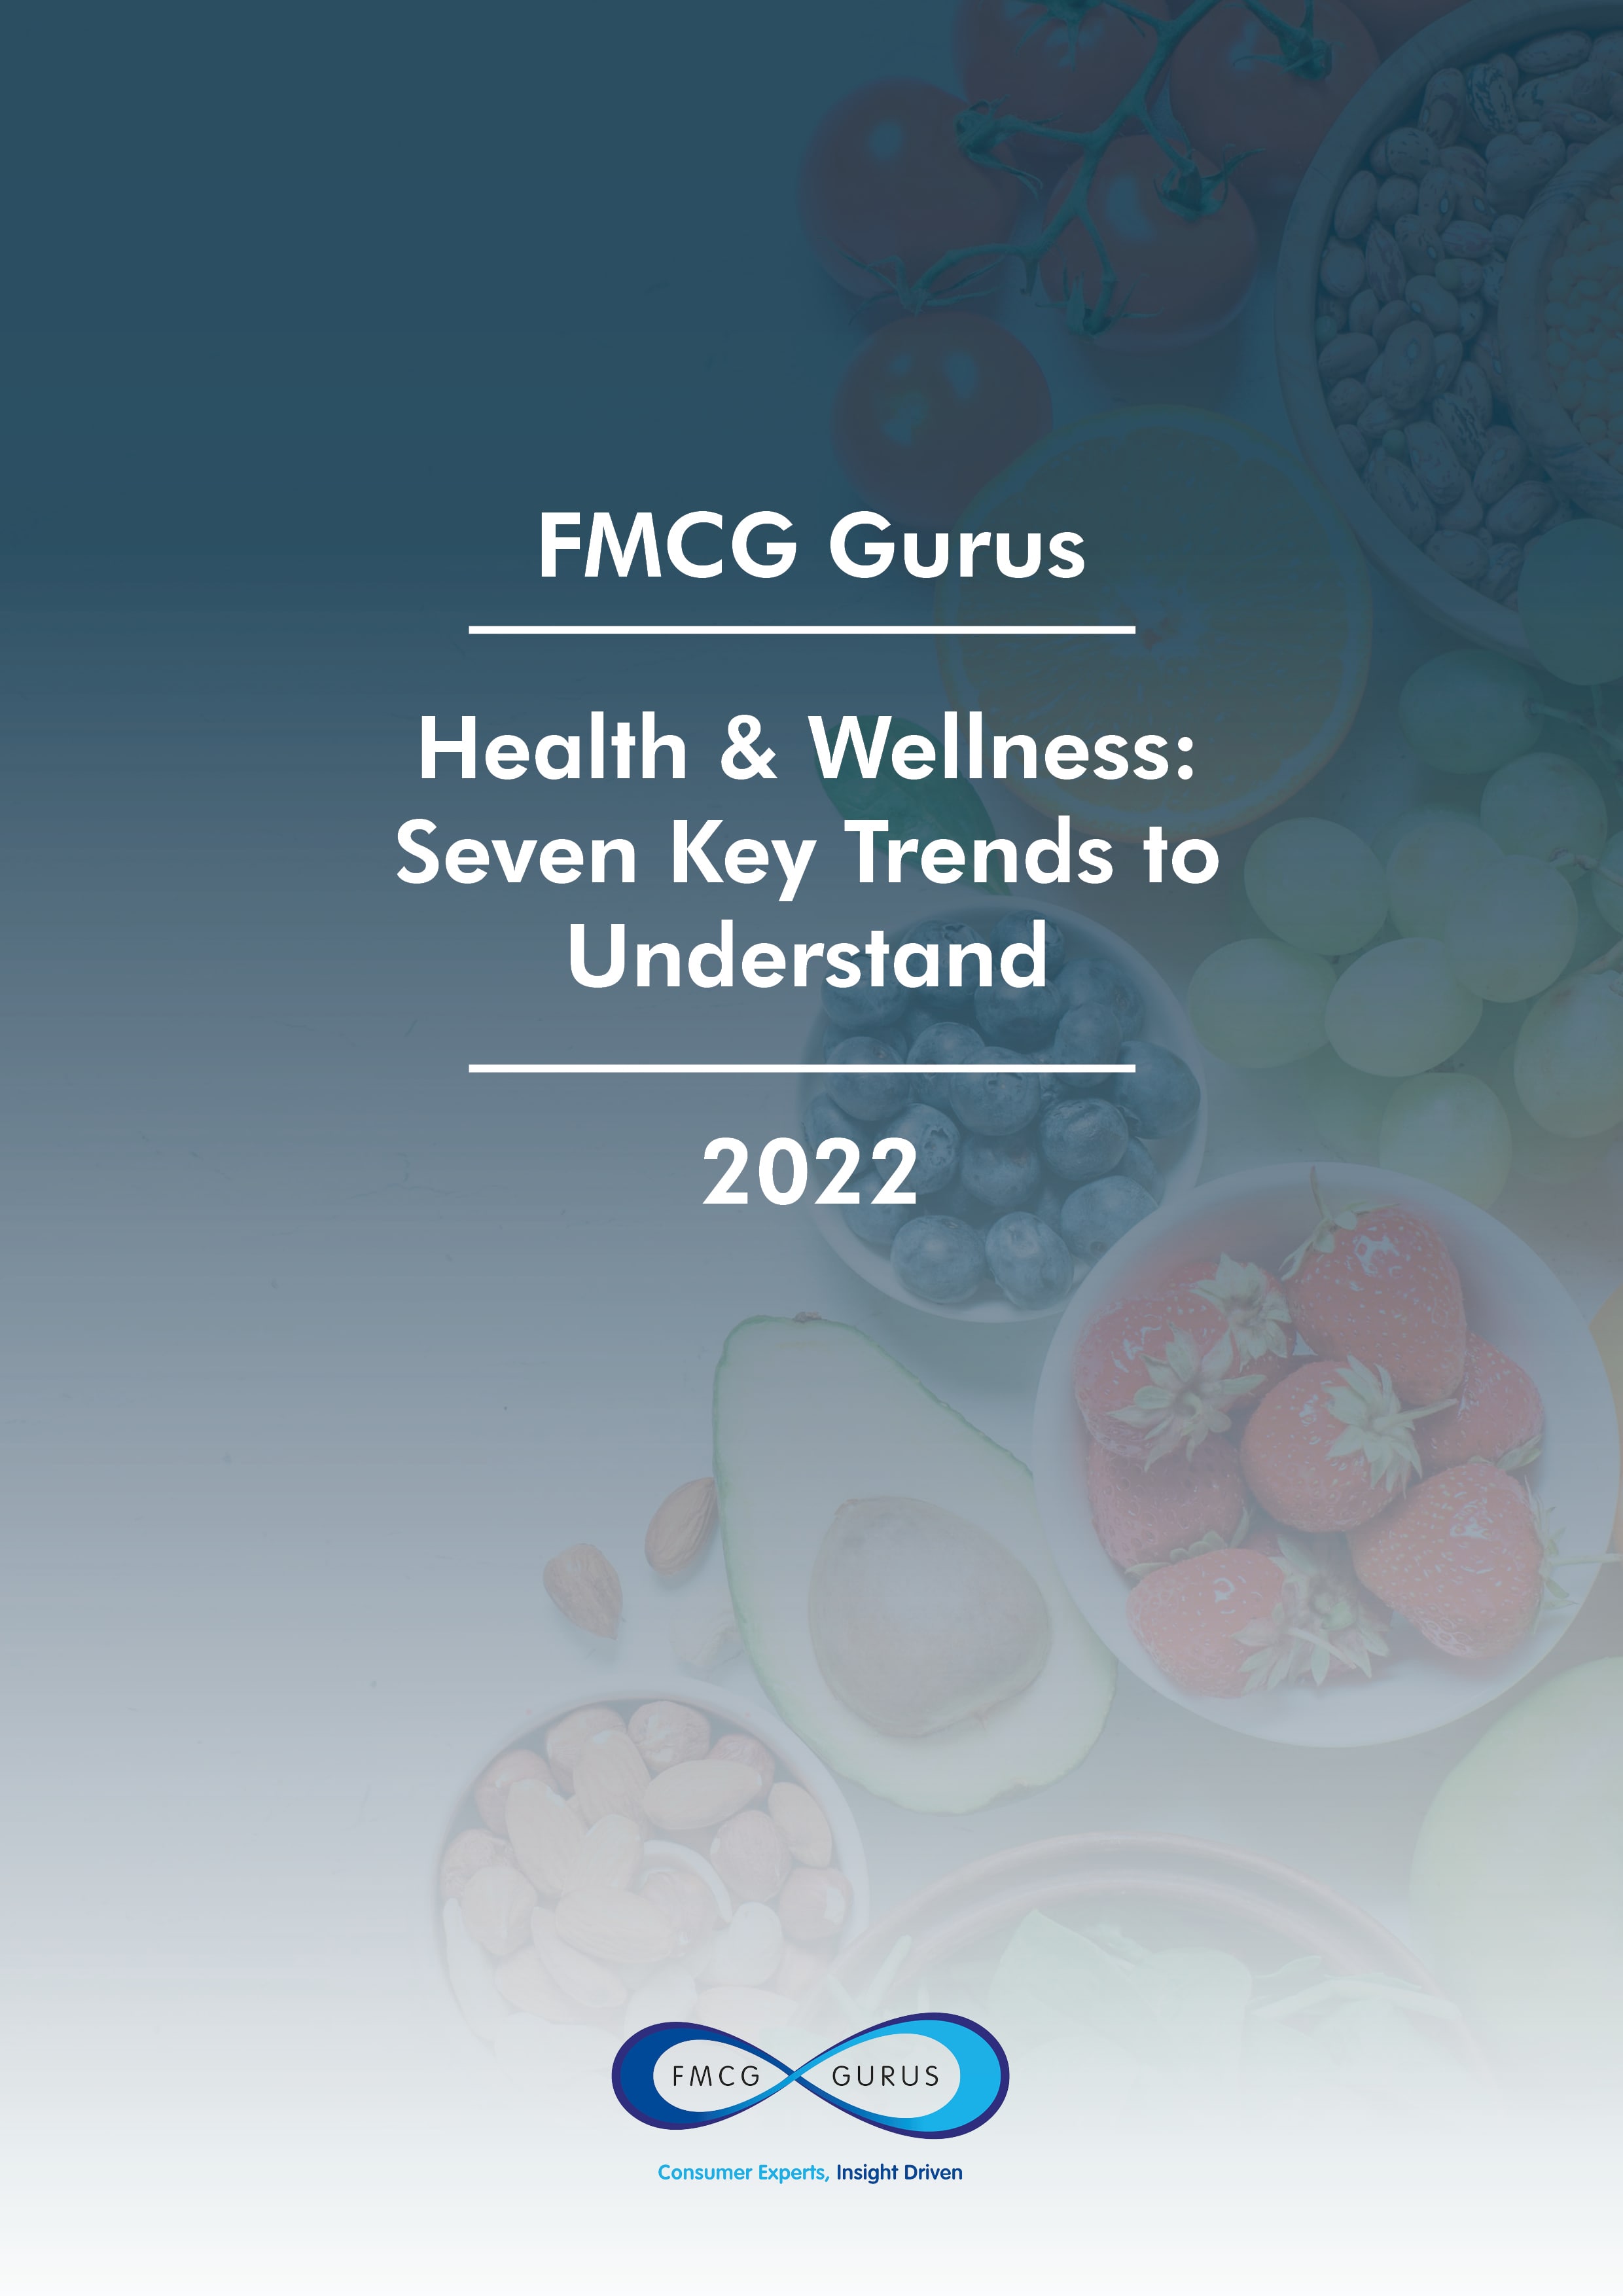 Health & Wellness - Seven Key Trends to Understand in 2022